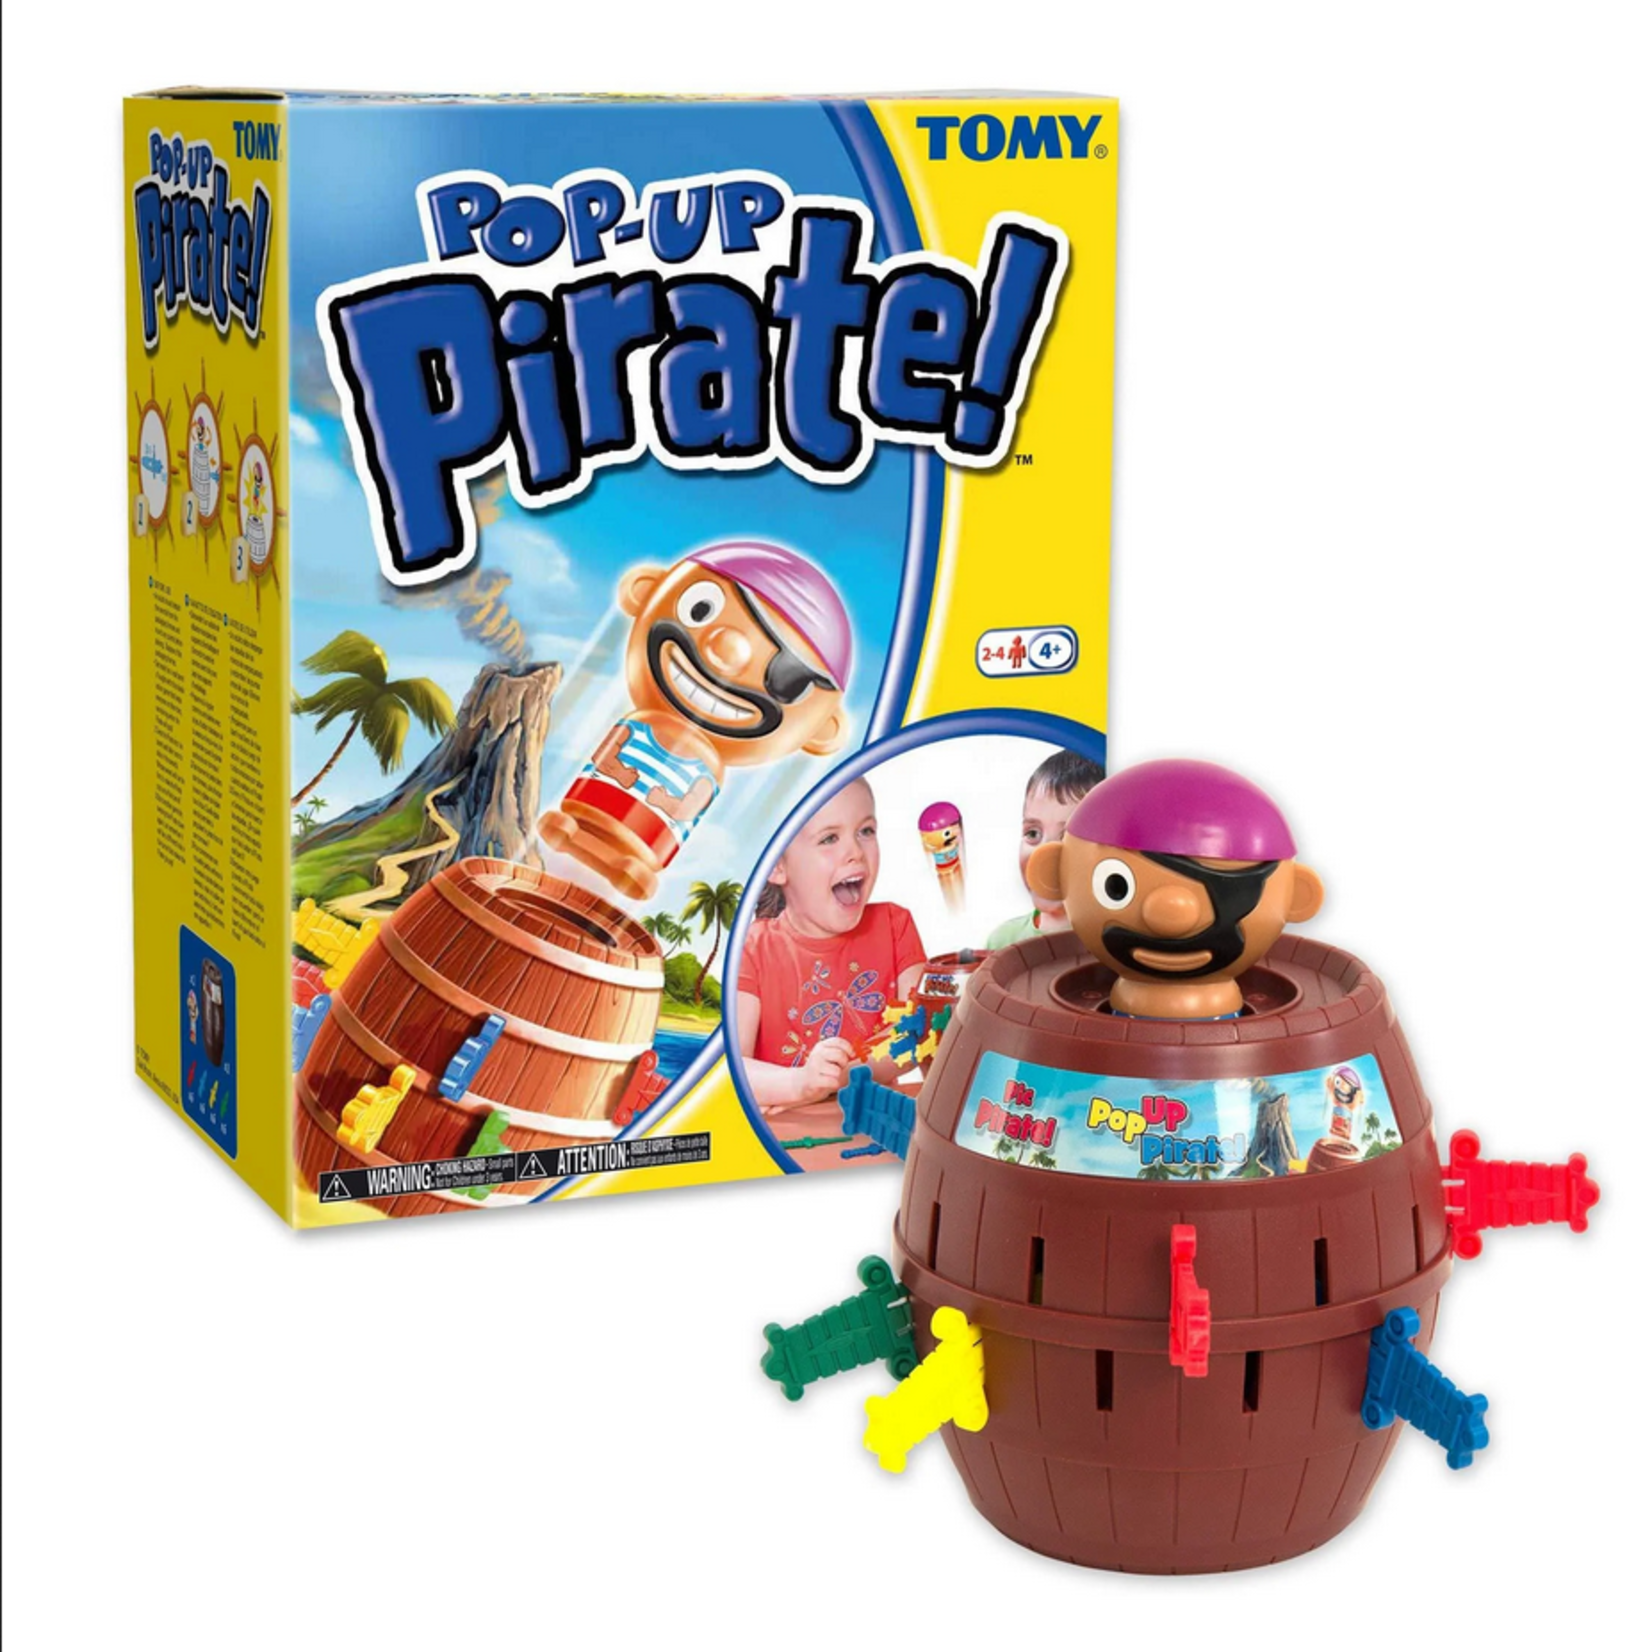 Tomy Pop-Up Pirate!